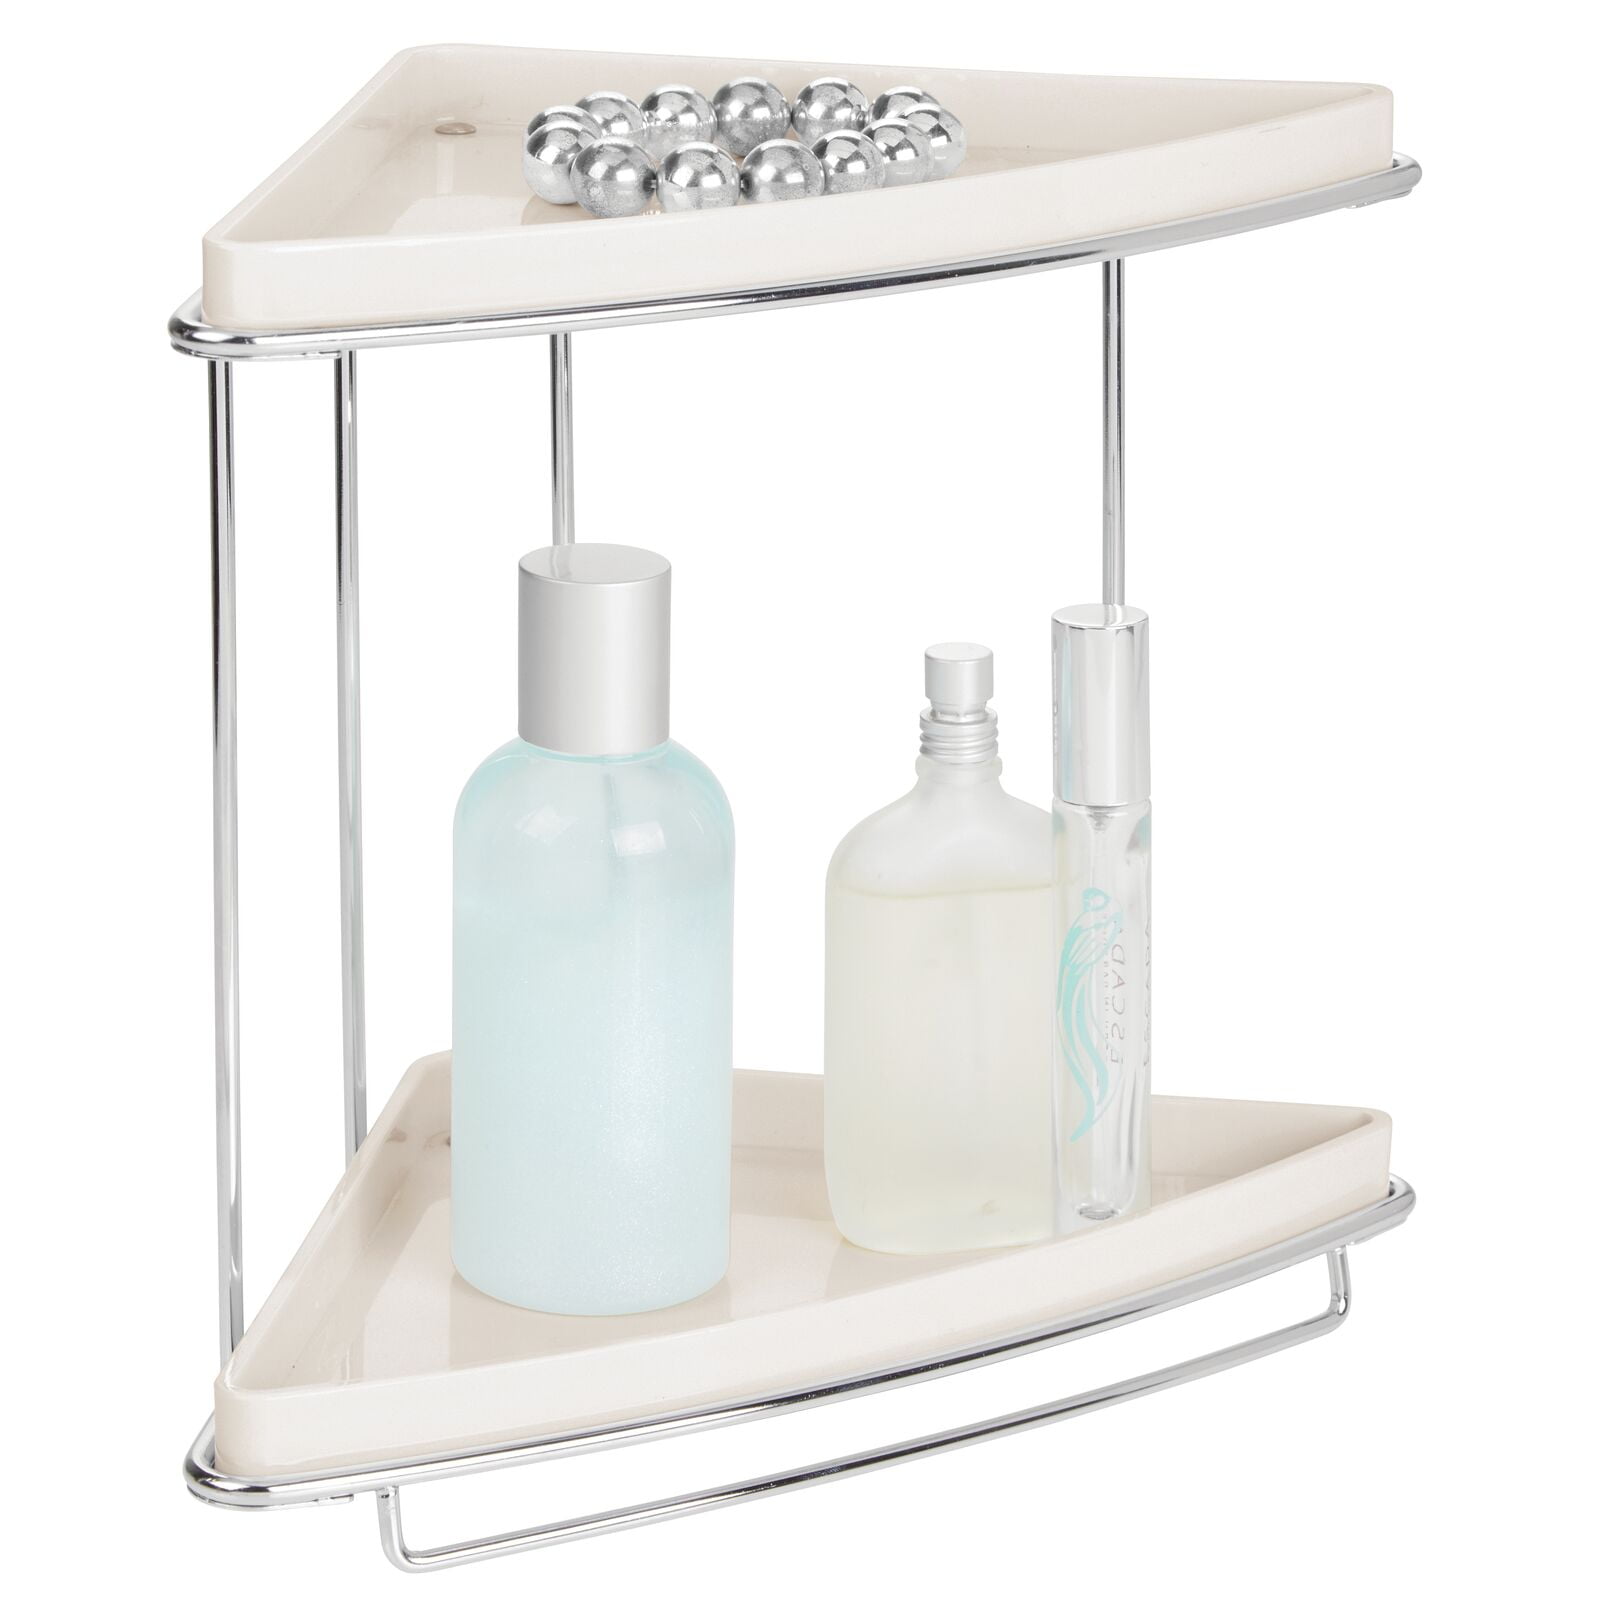 mDesign Steel/Plastic 2-Tier Bathroom Freestanding Organizer Shelf - Cream